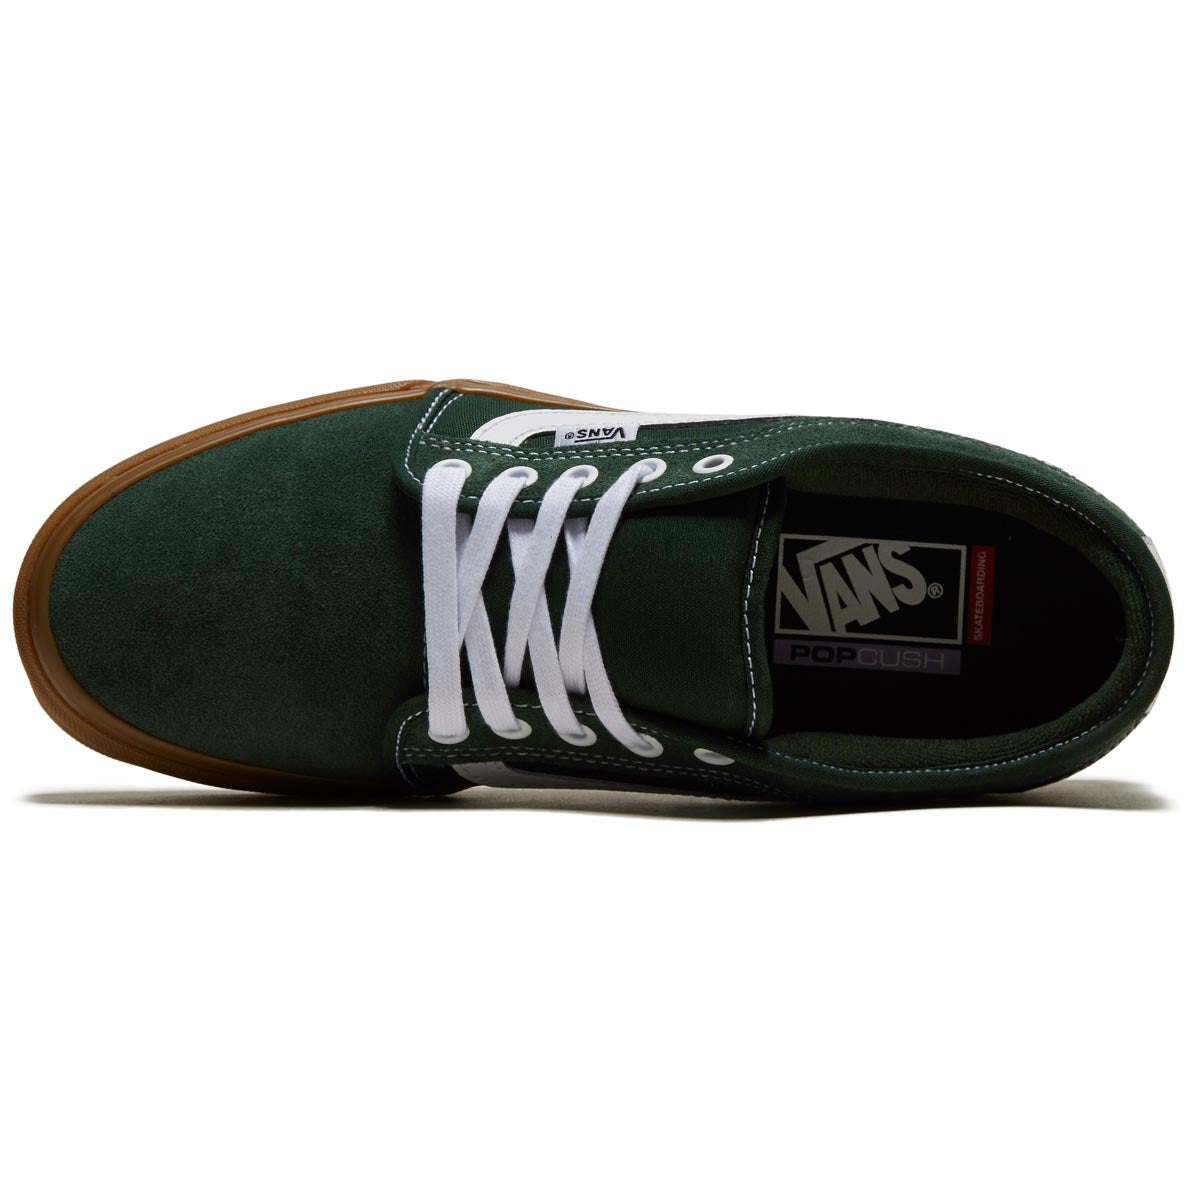 Vans Chukka Low Sidestripe Shoes - Dark Green/Gum image 3